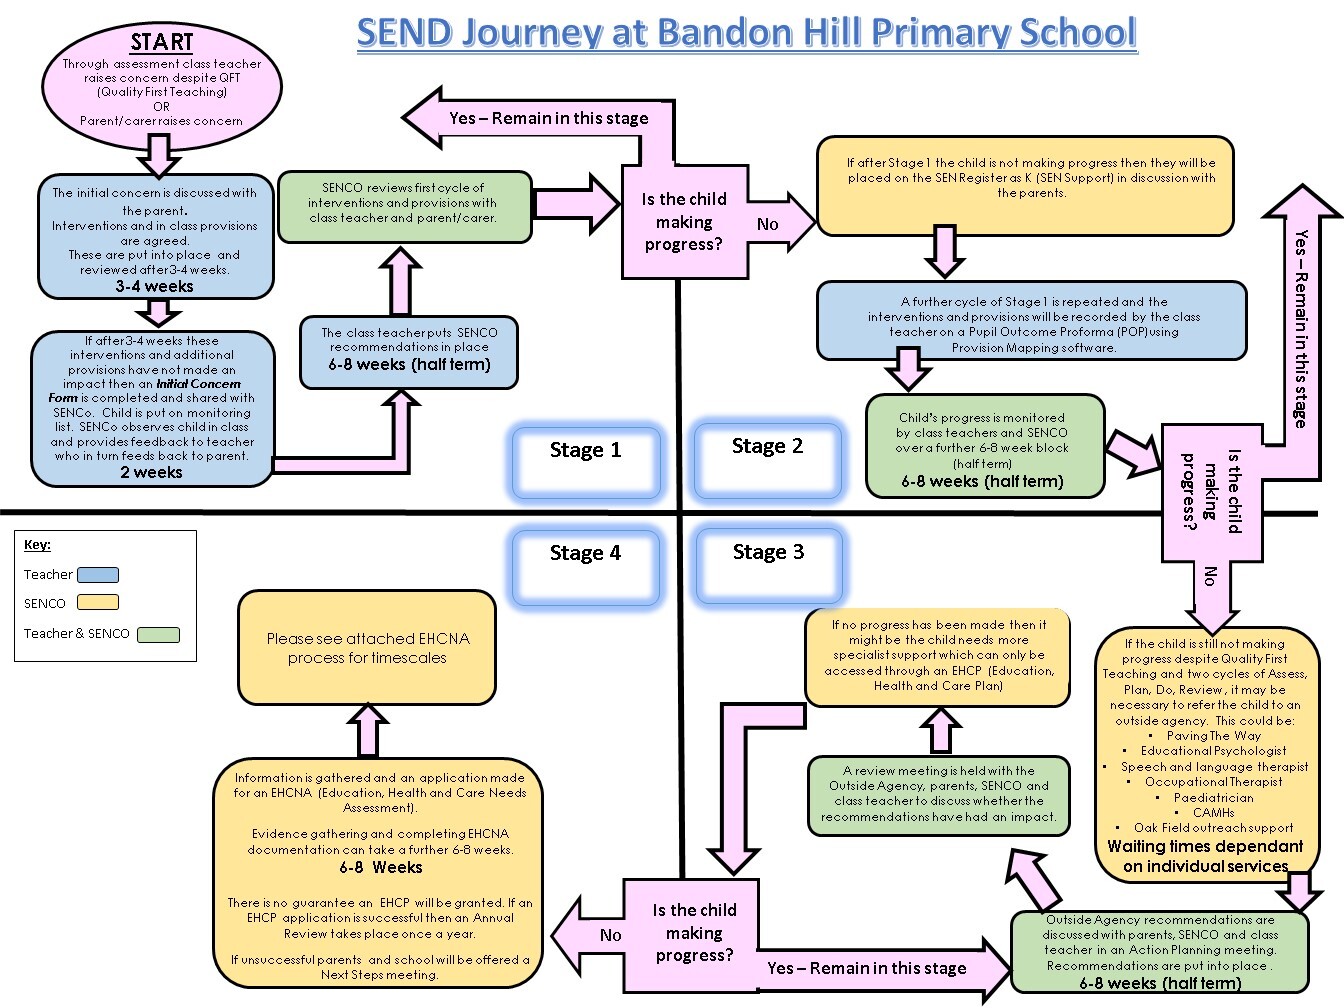 Send journey flow diagram alternative view bandon hill